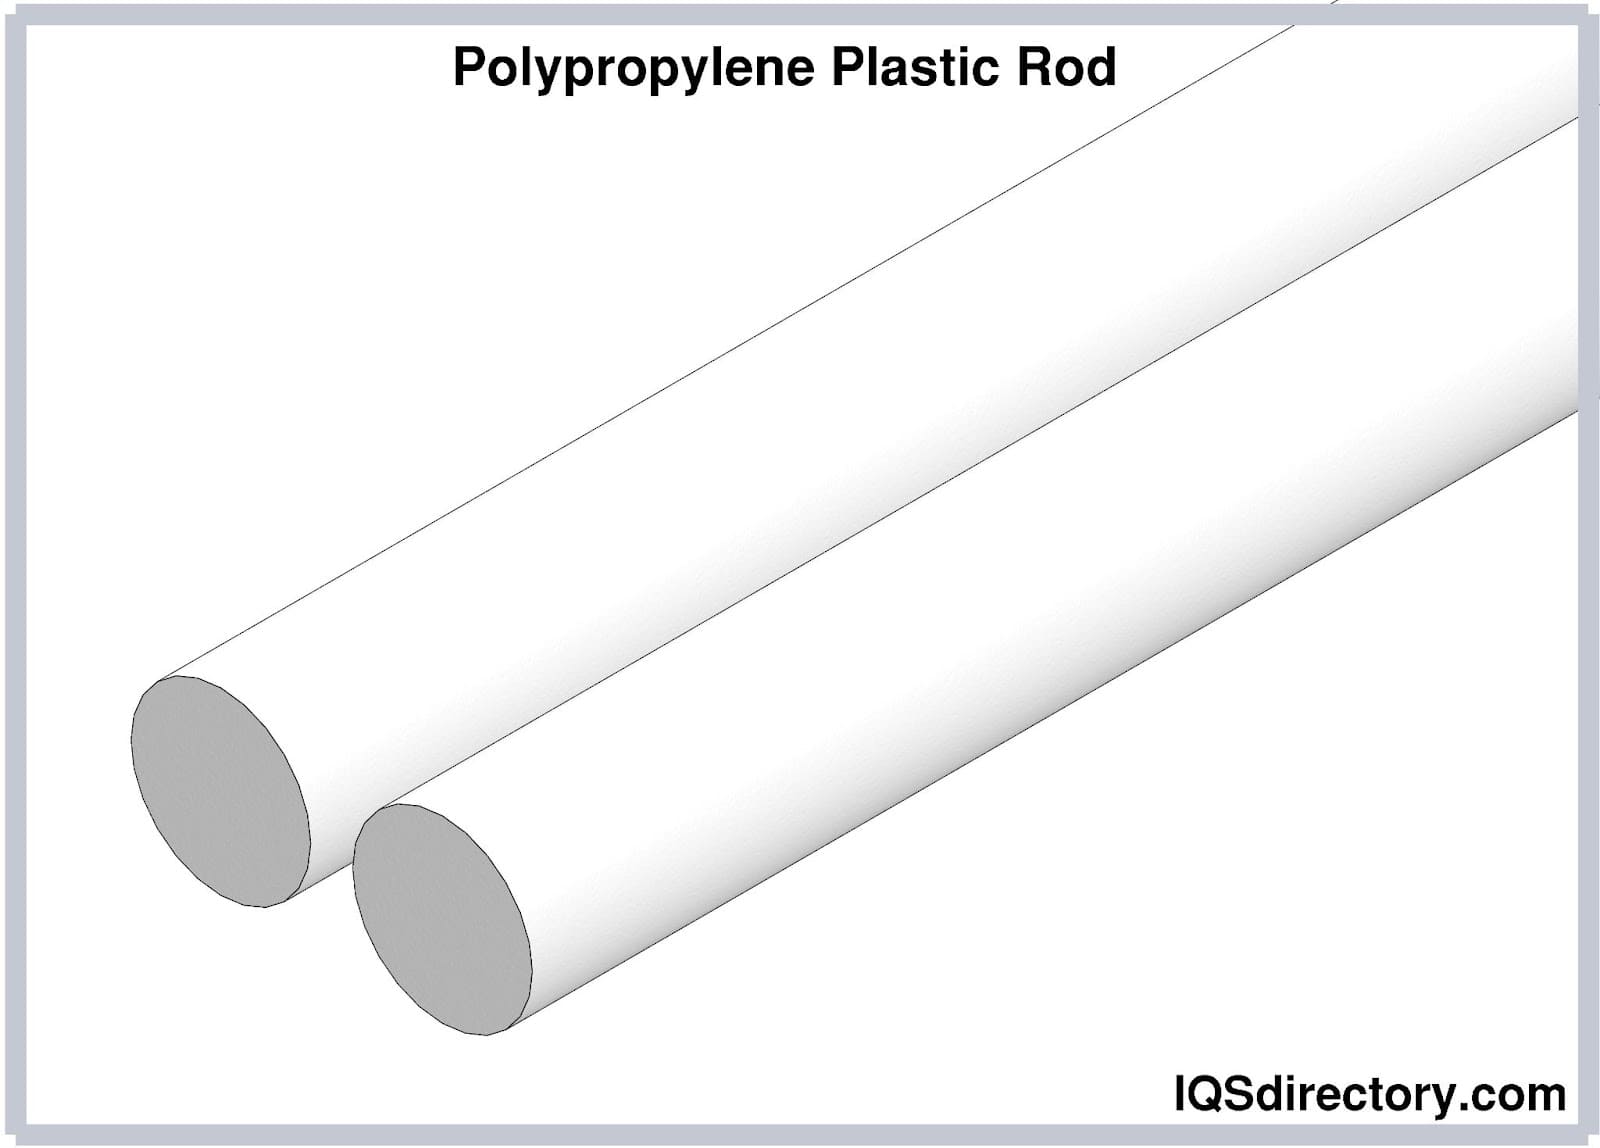 Polypropylene Plastic Rod